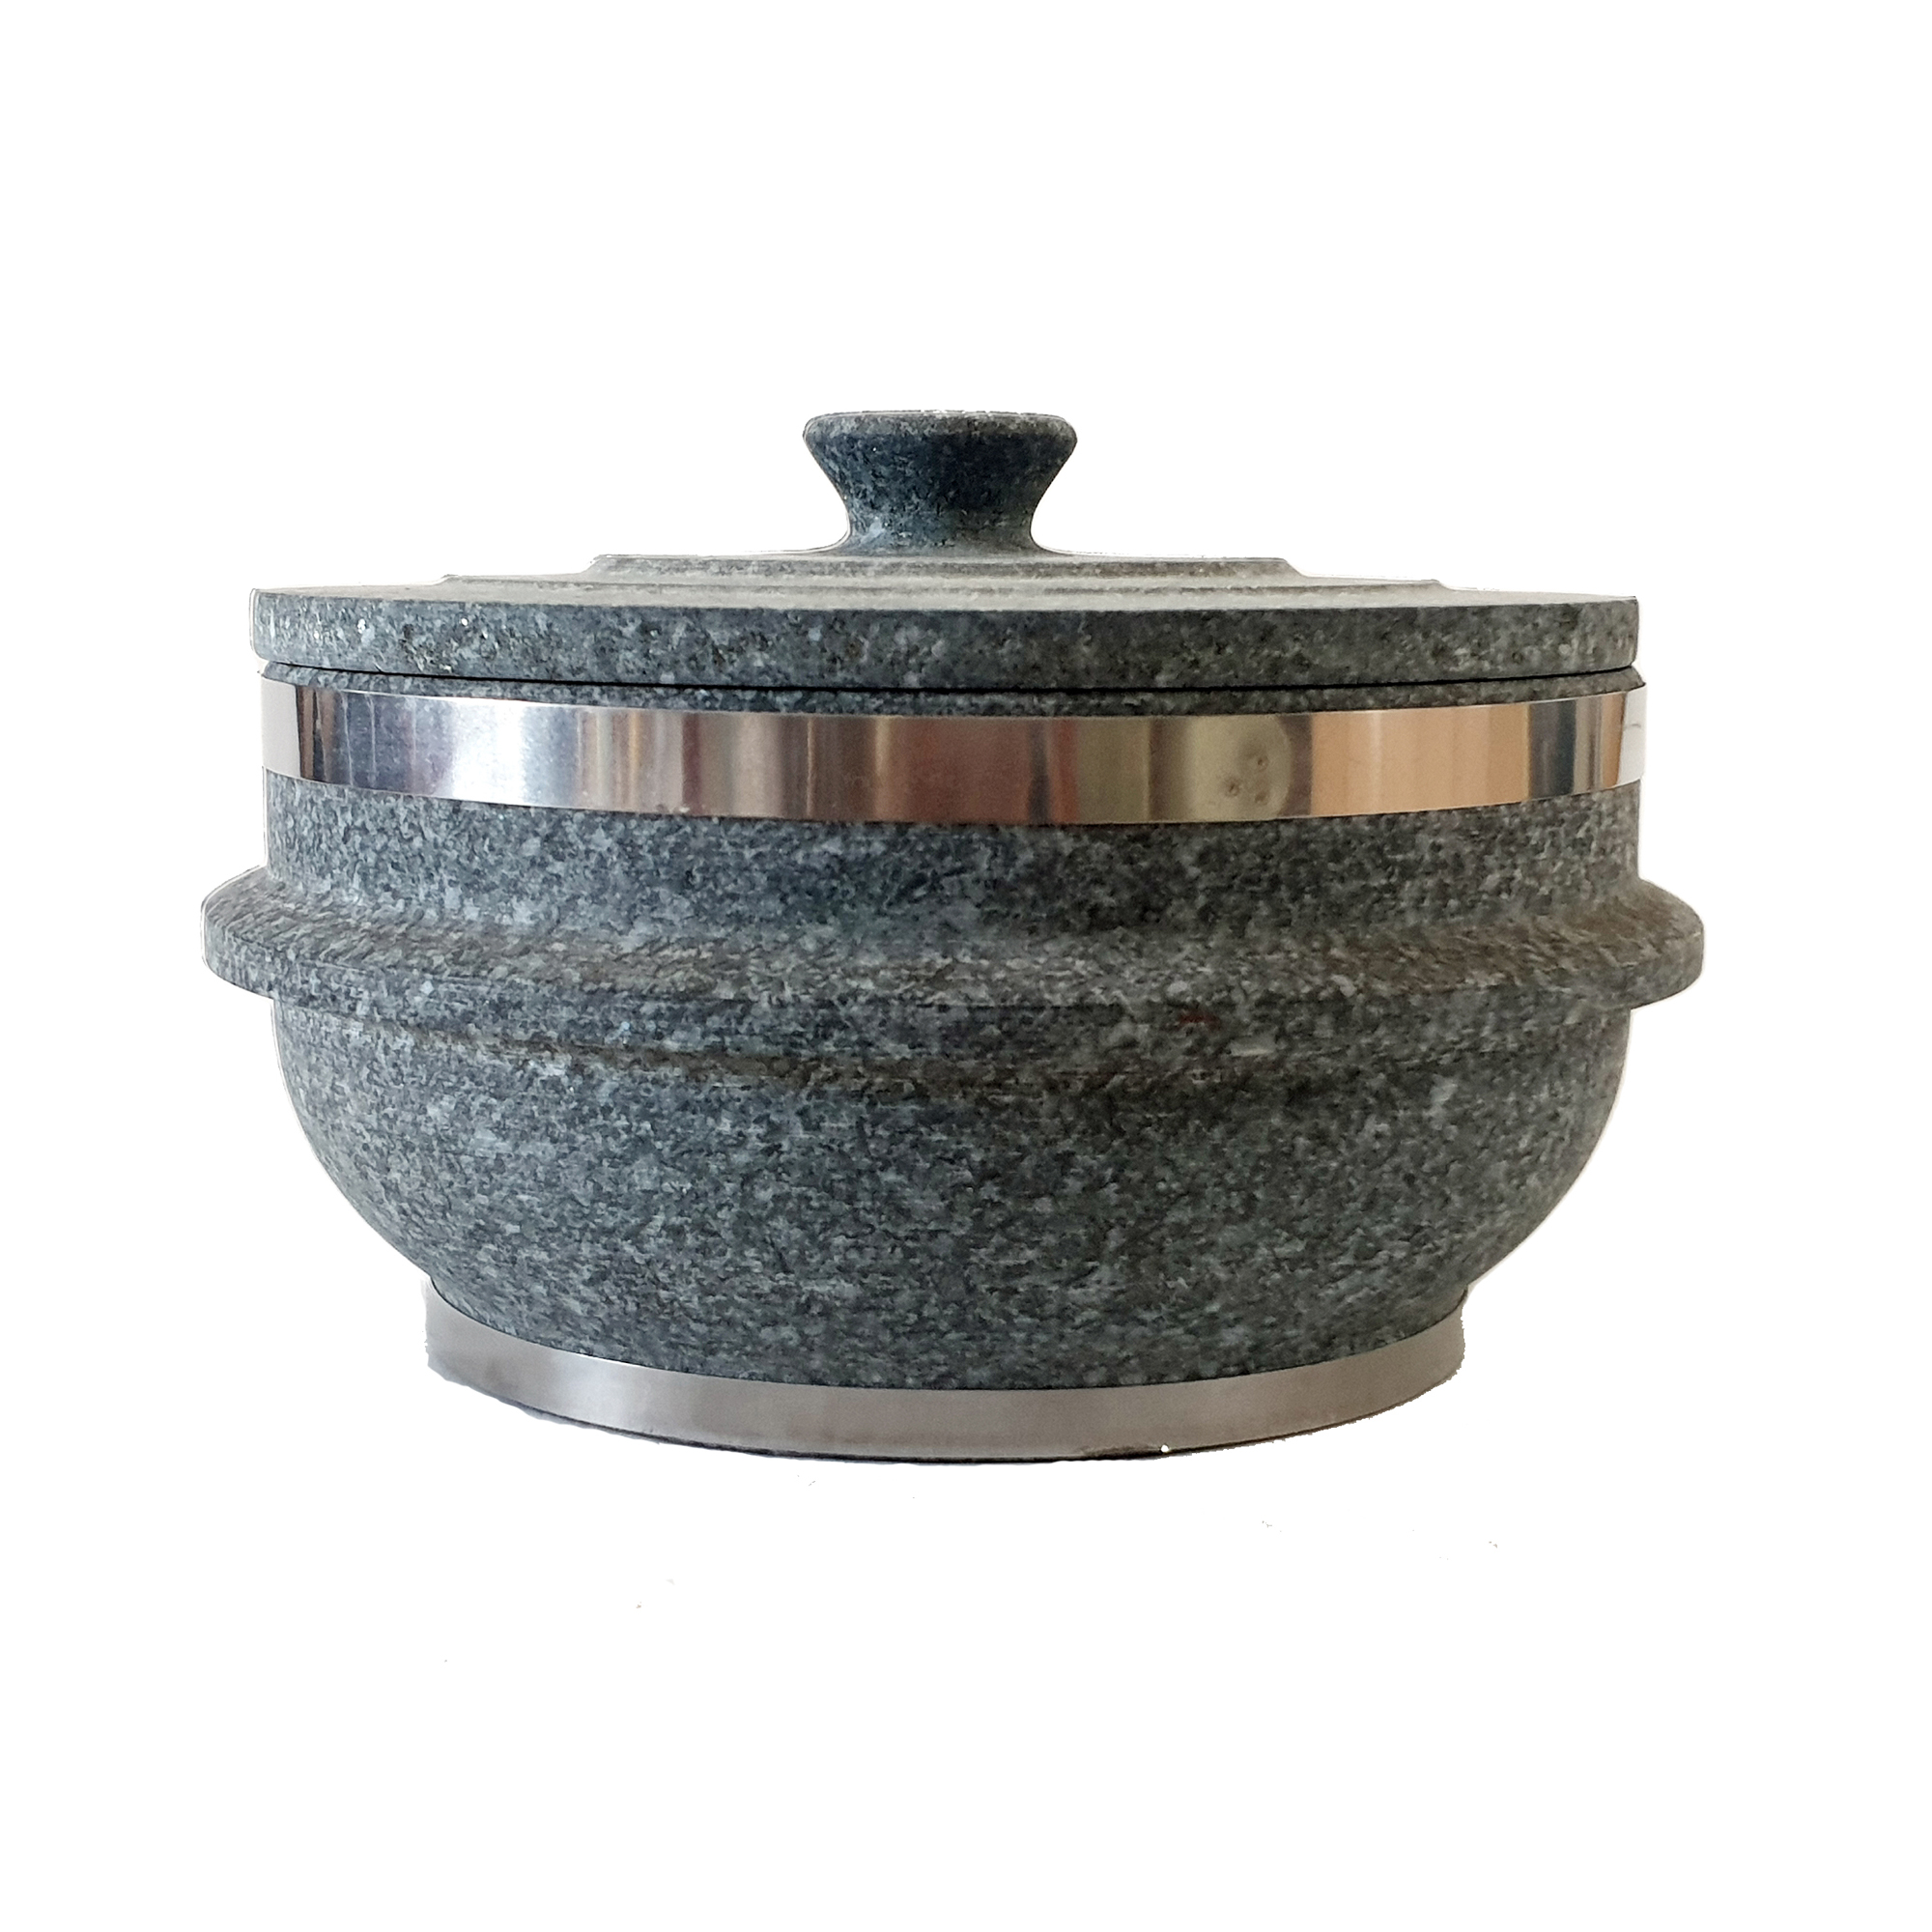 Korean Stone Pot with Lid